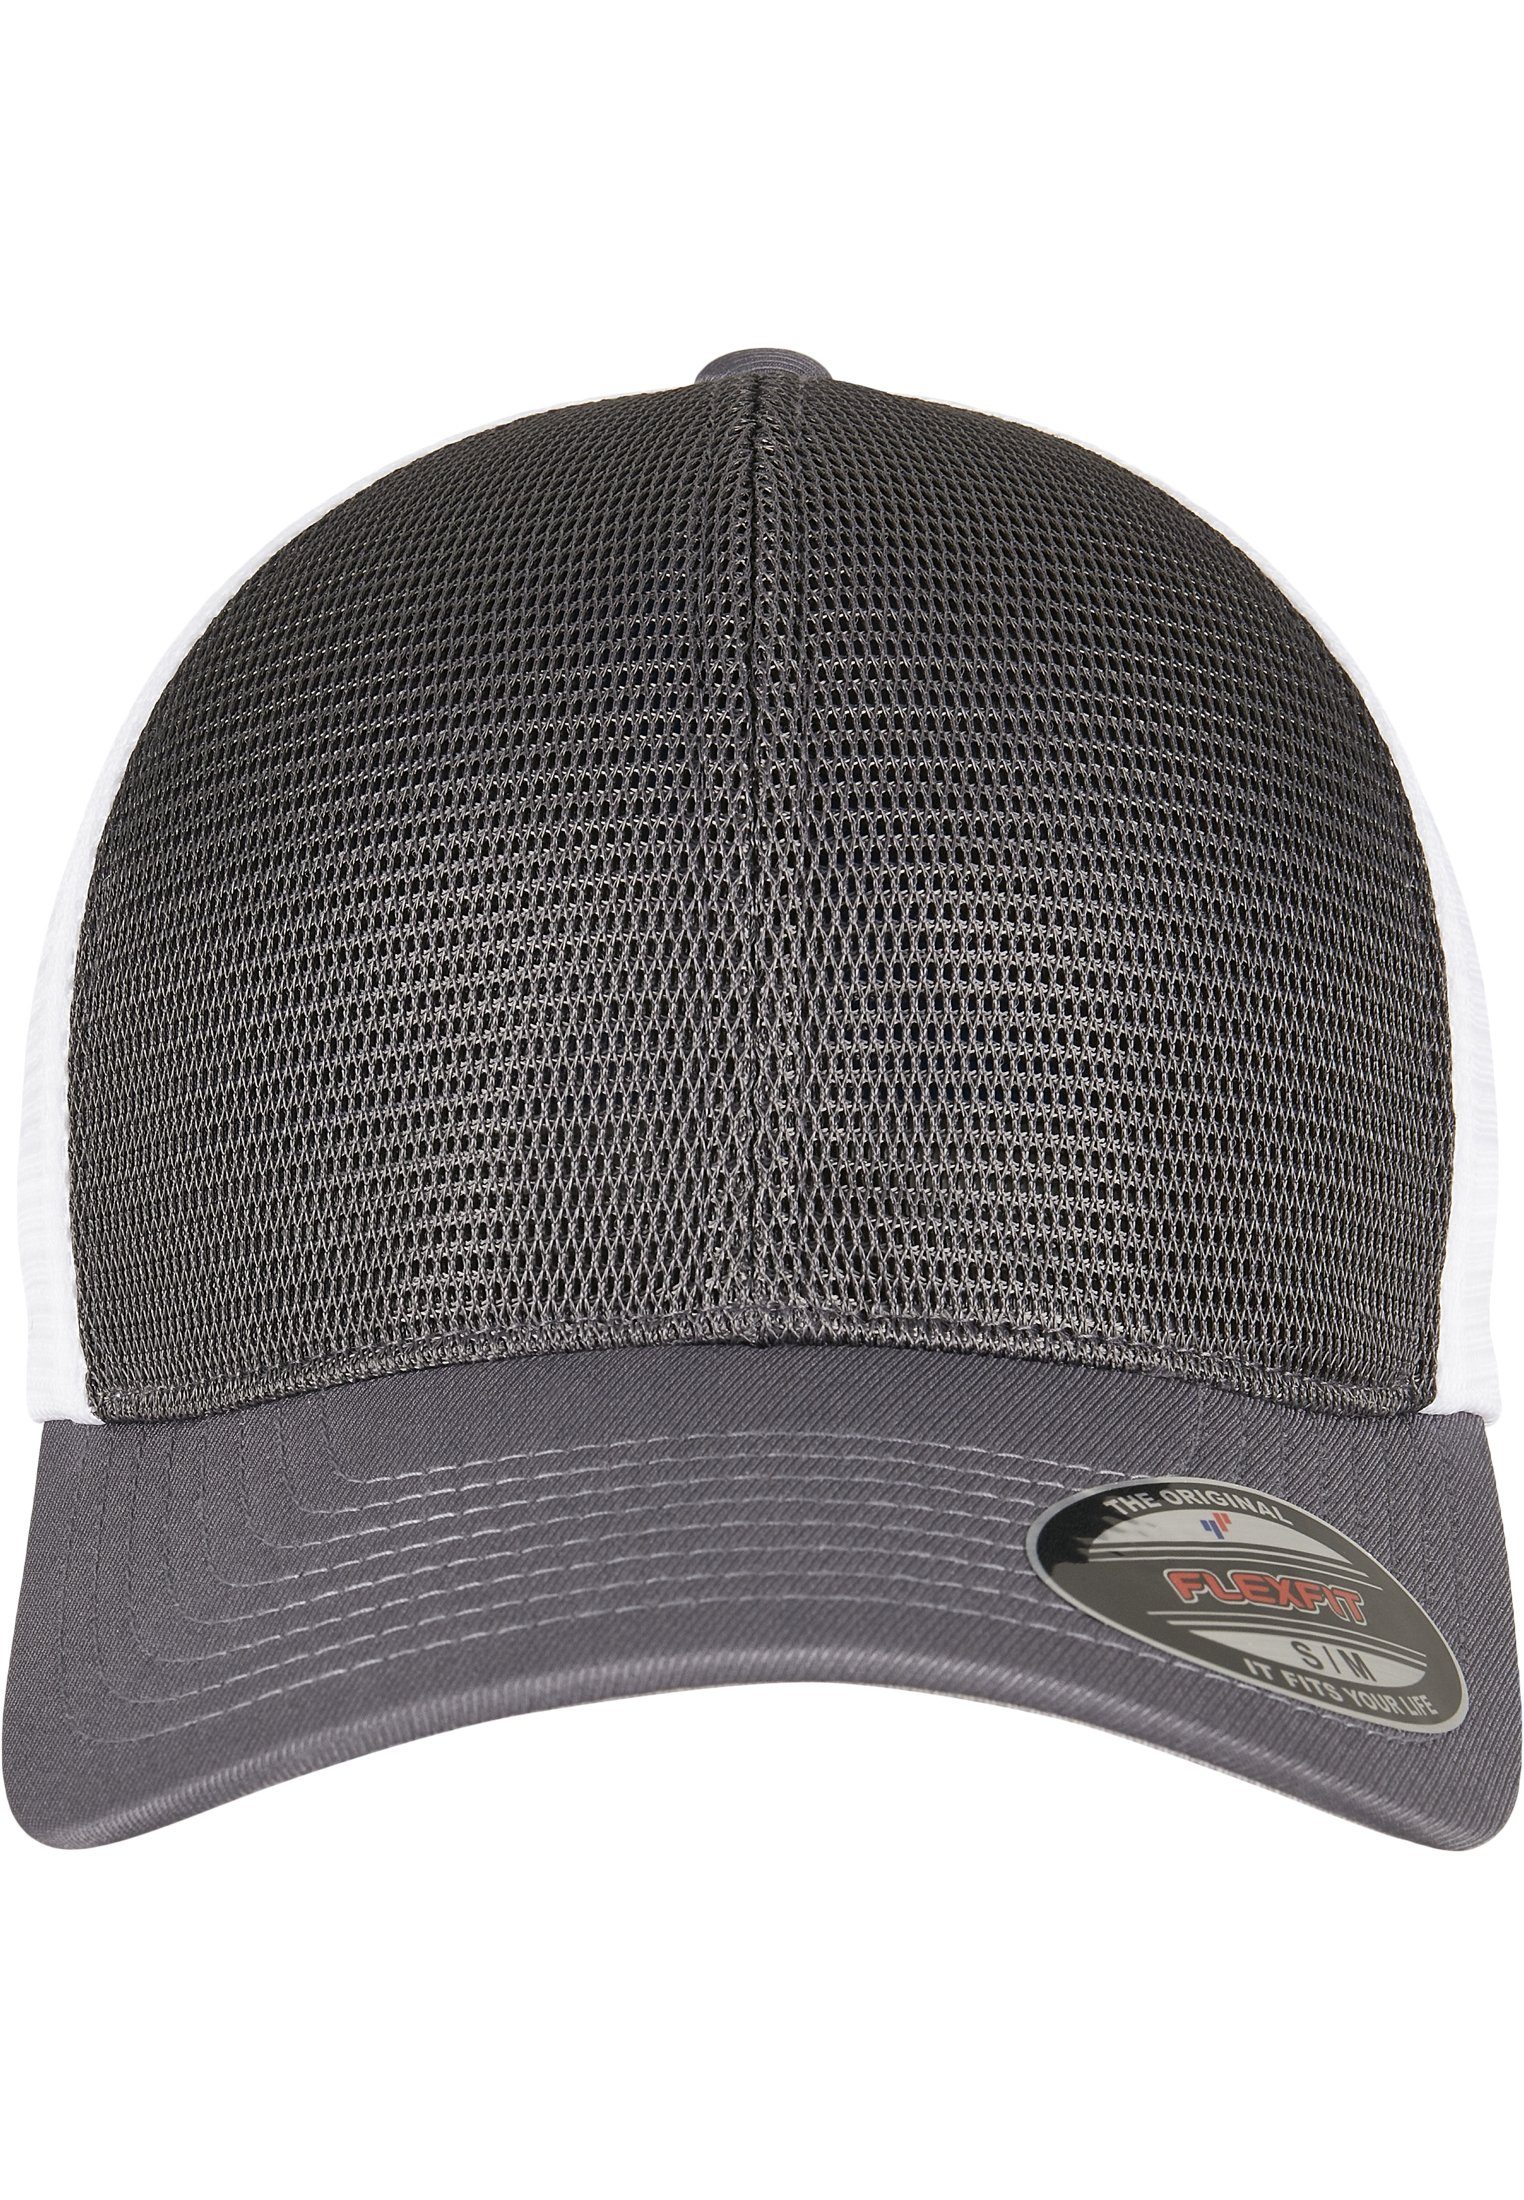 Kollektion 2-TONE CAP Flexfit charcoal/white Flex Neue 360 FLEXFIT OMNIMESH Cap